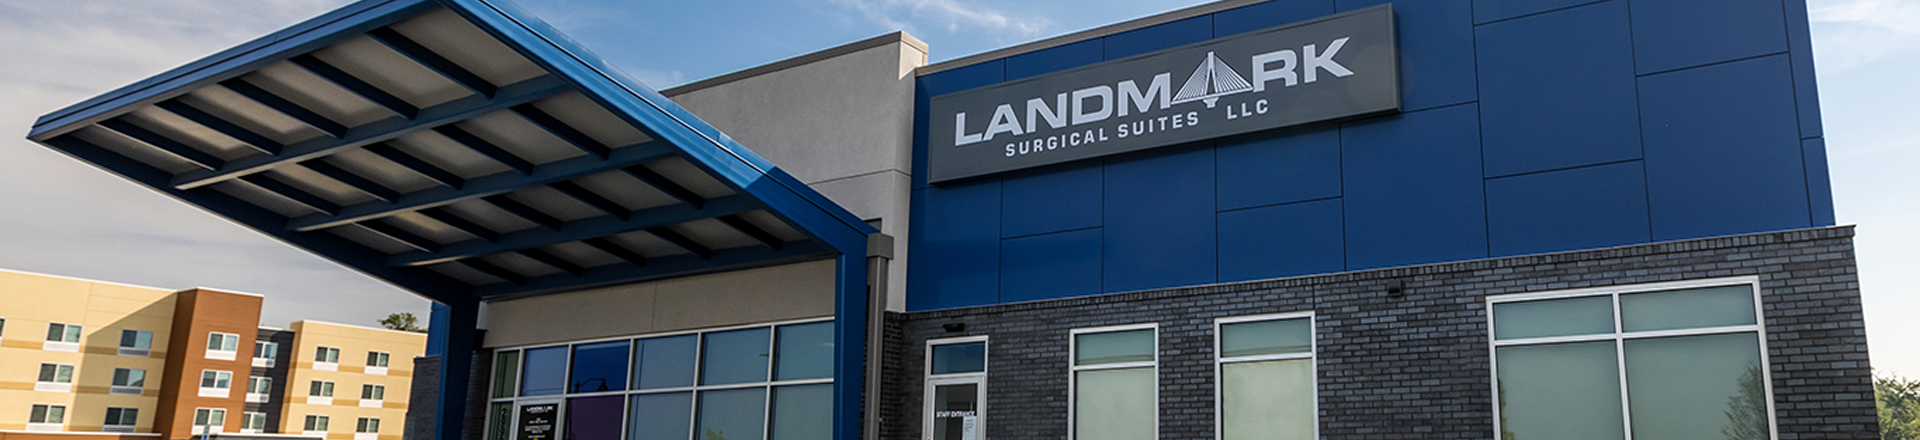 Landmark Surgical Suites bldg